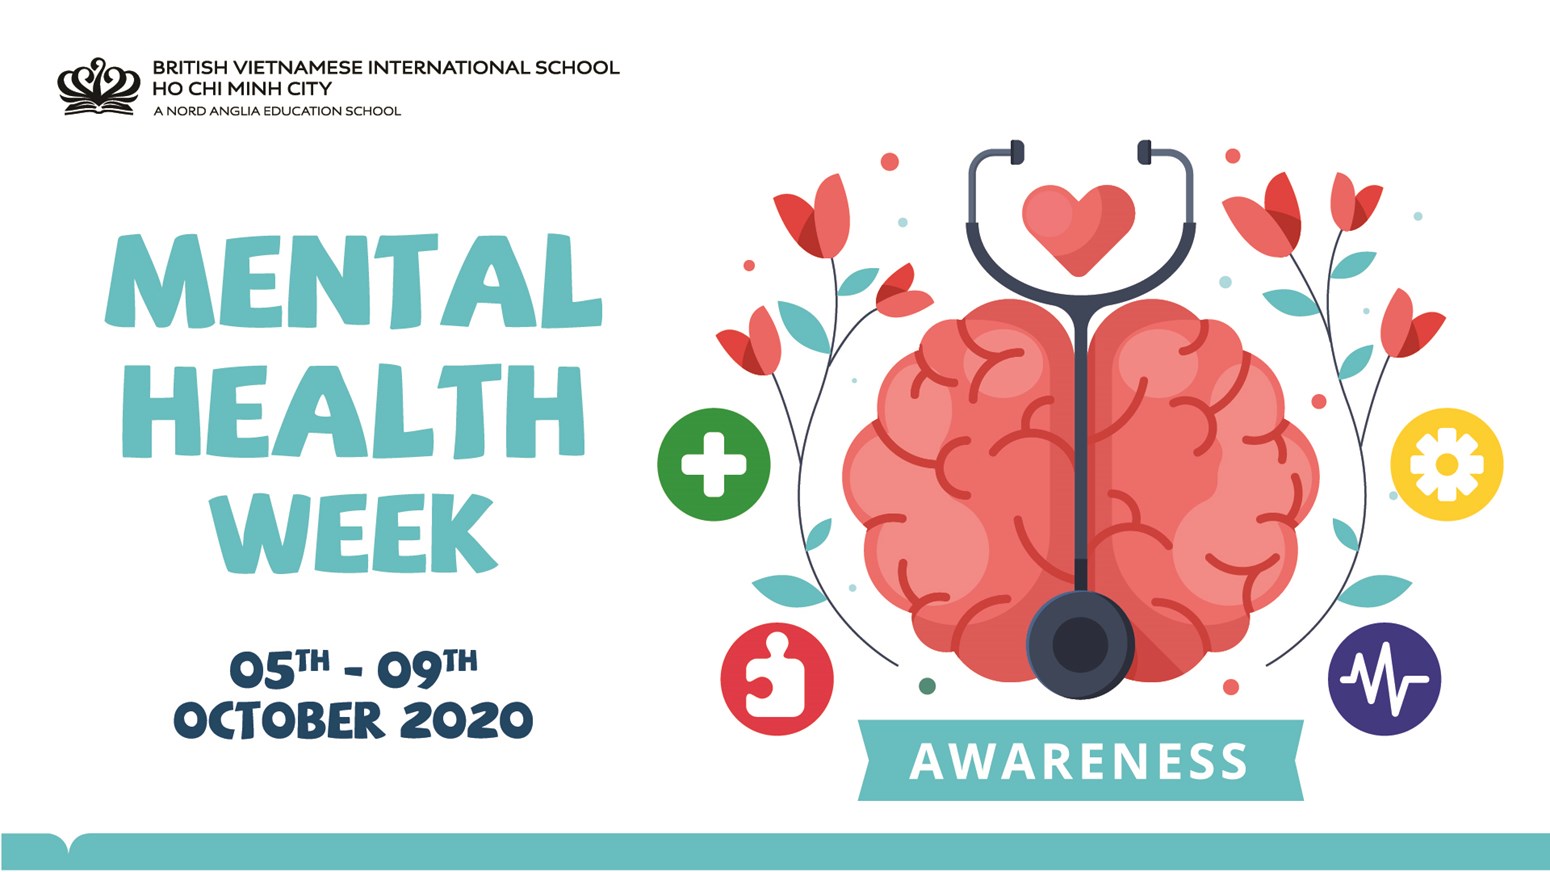 BVIS HCMC Mental Health Week 2020